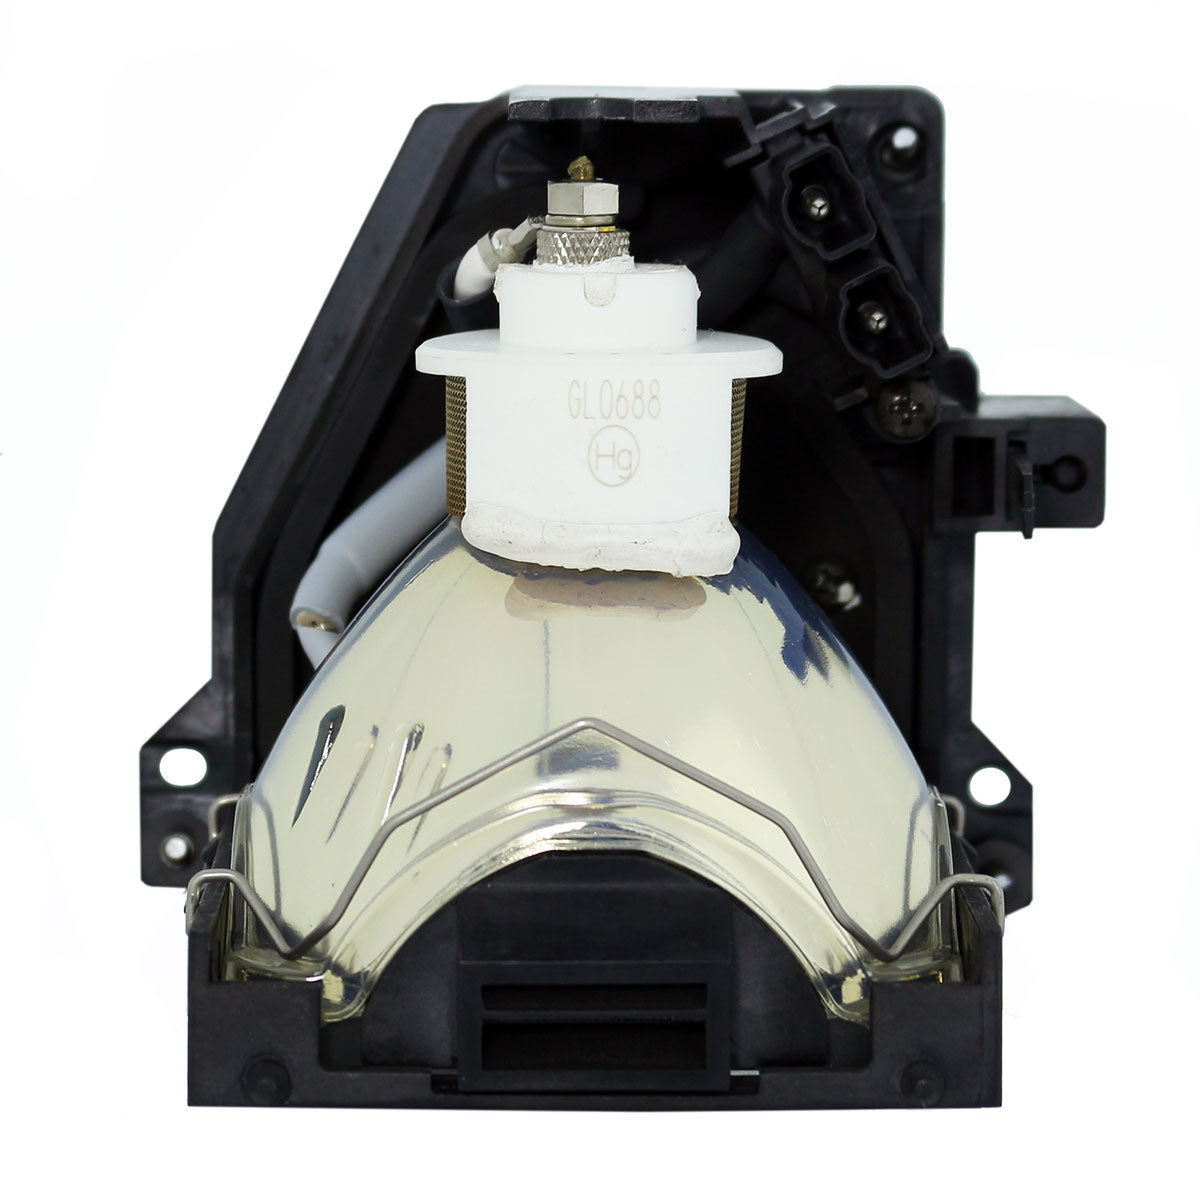 Viewsonic RLC-005 Ushio Projector Lamp Module